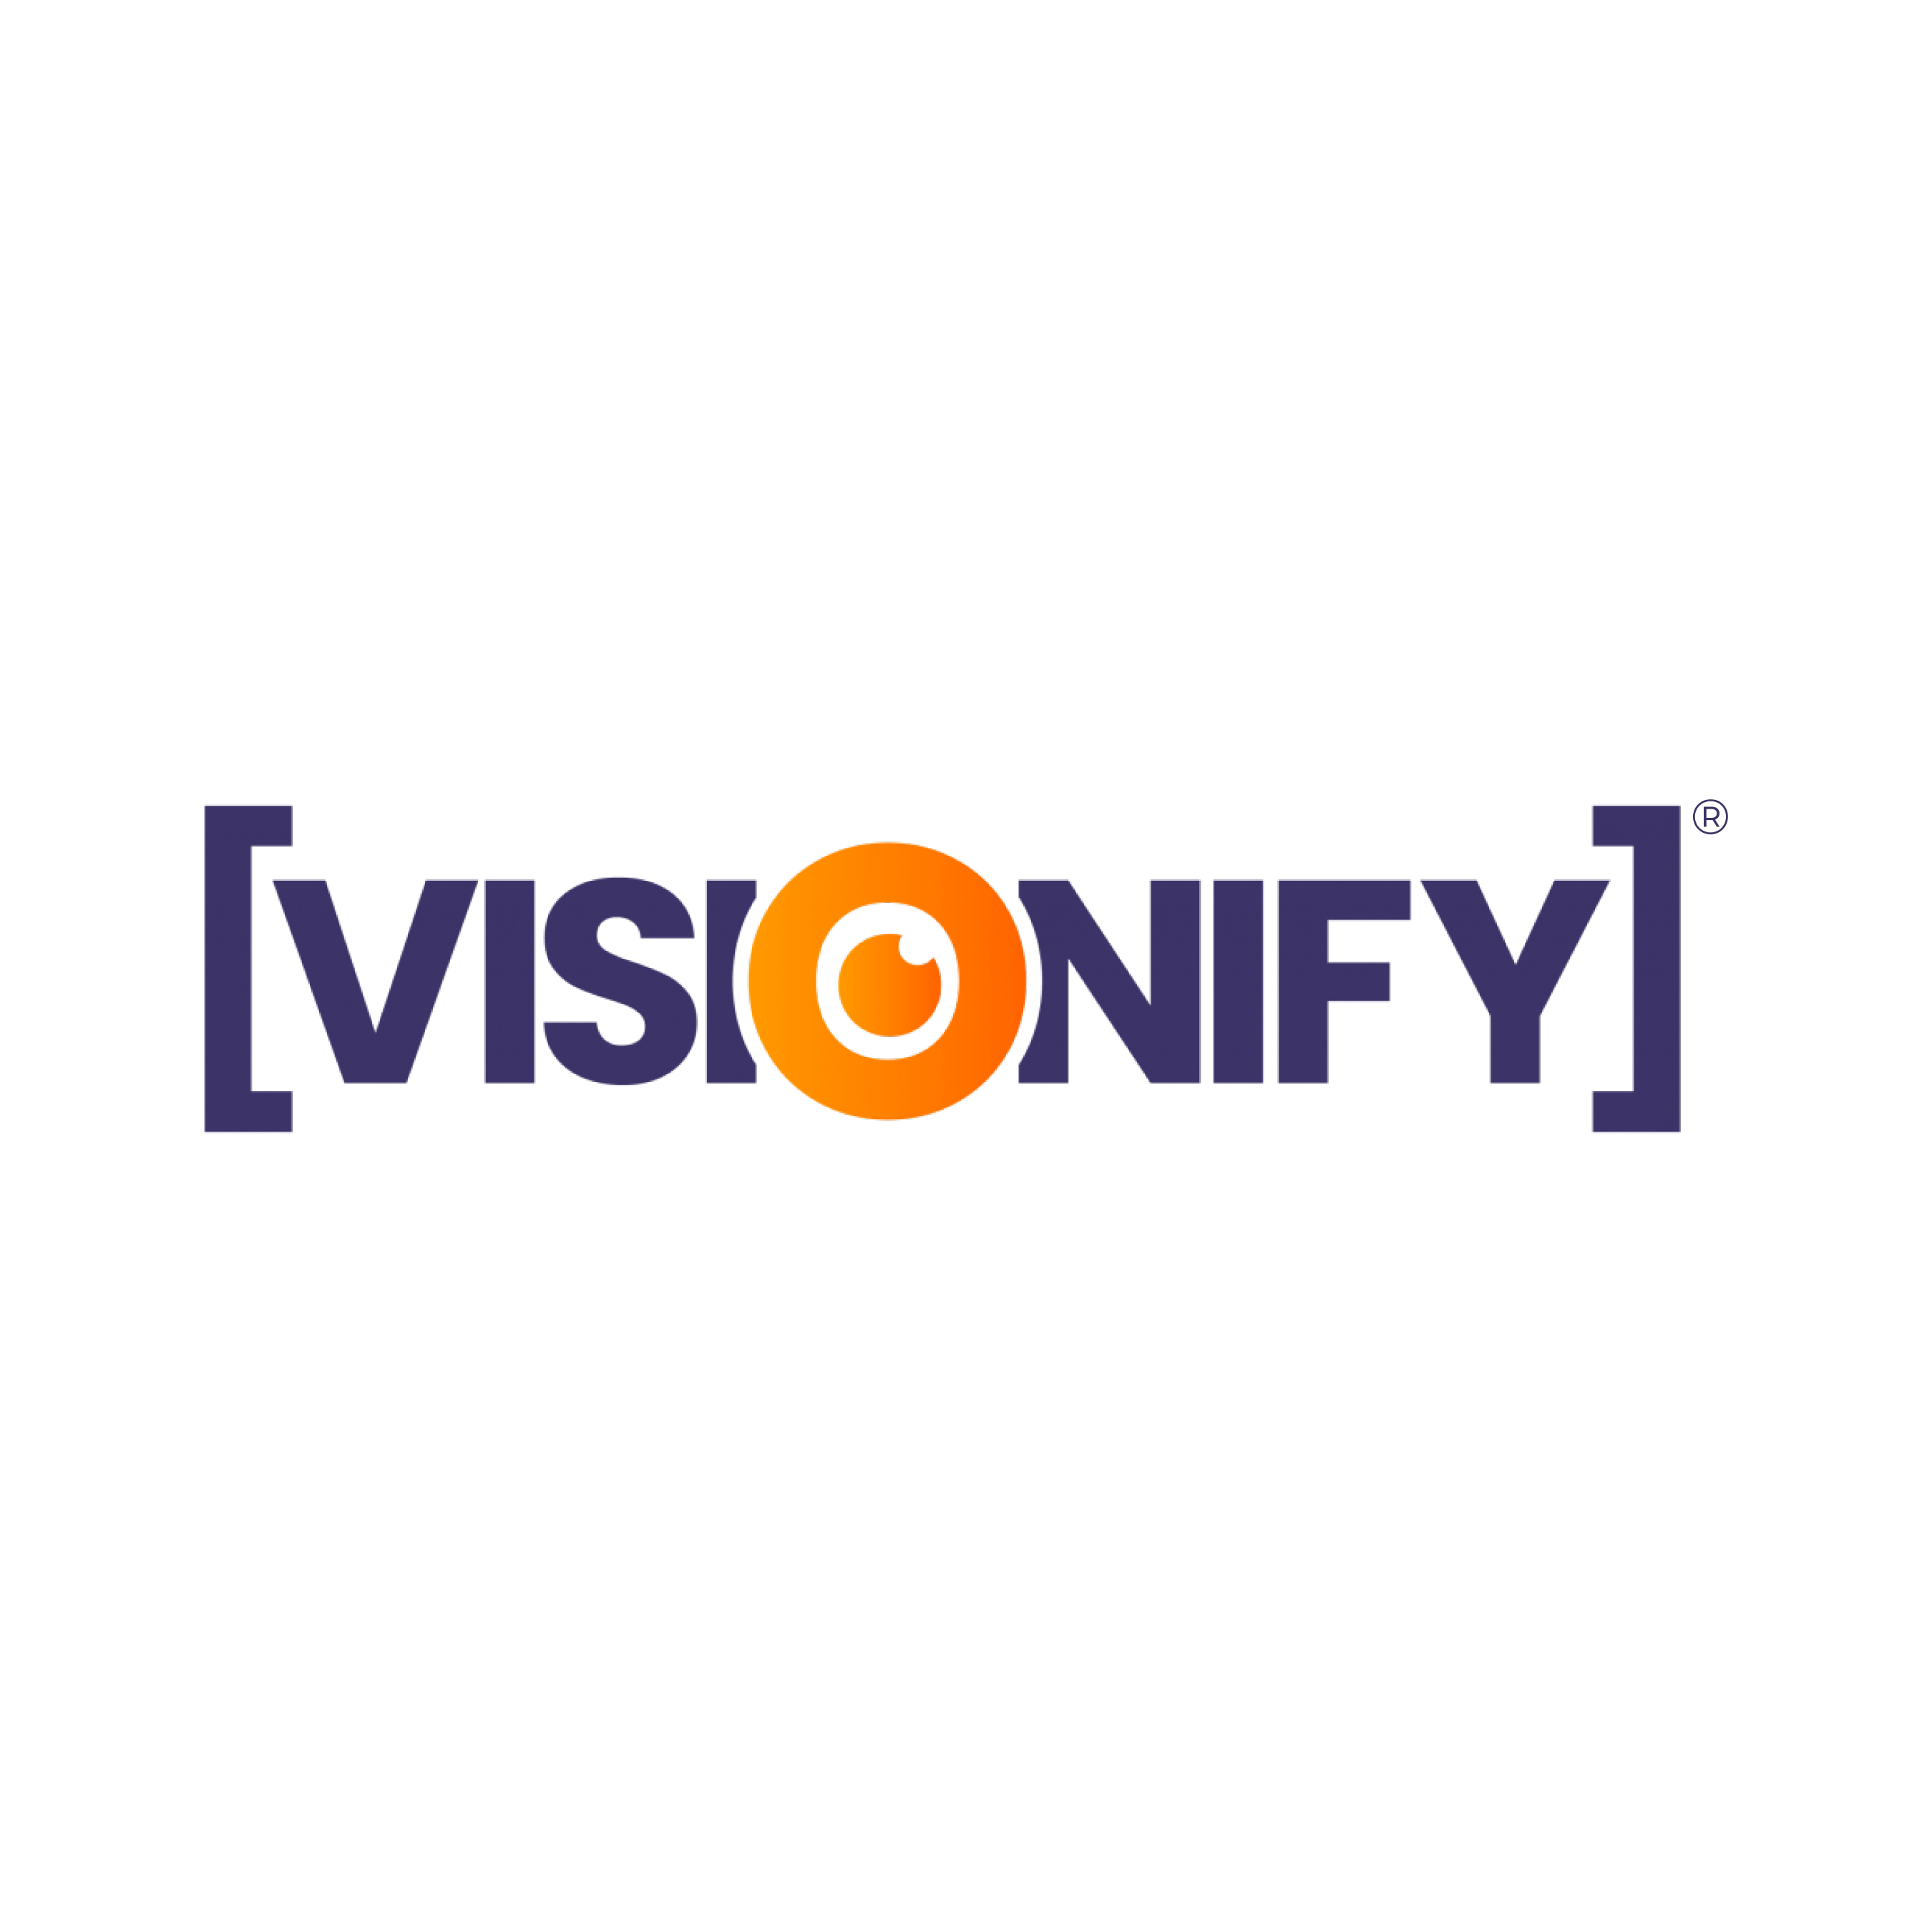 Visionify